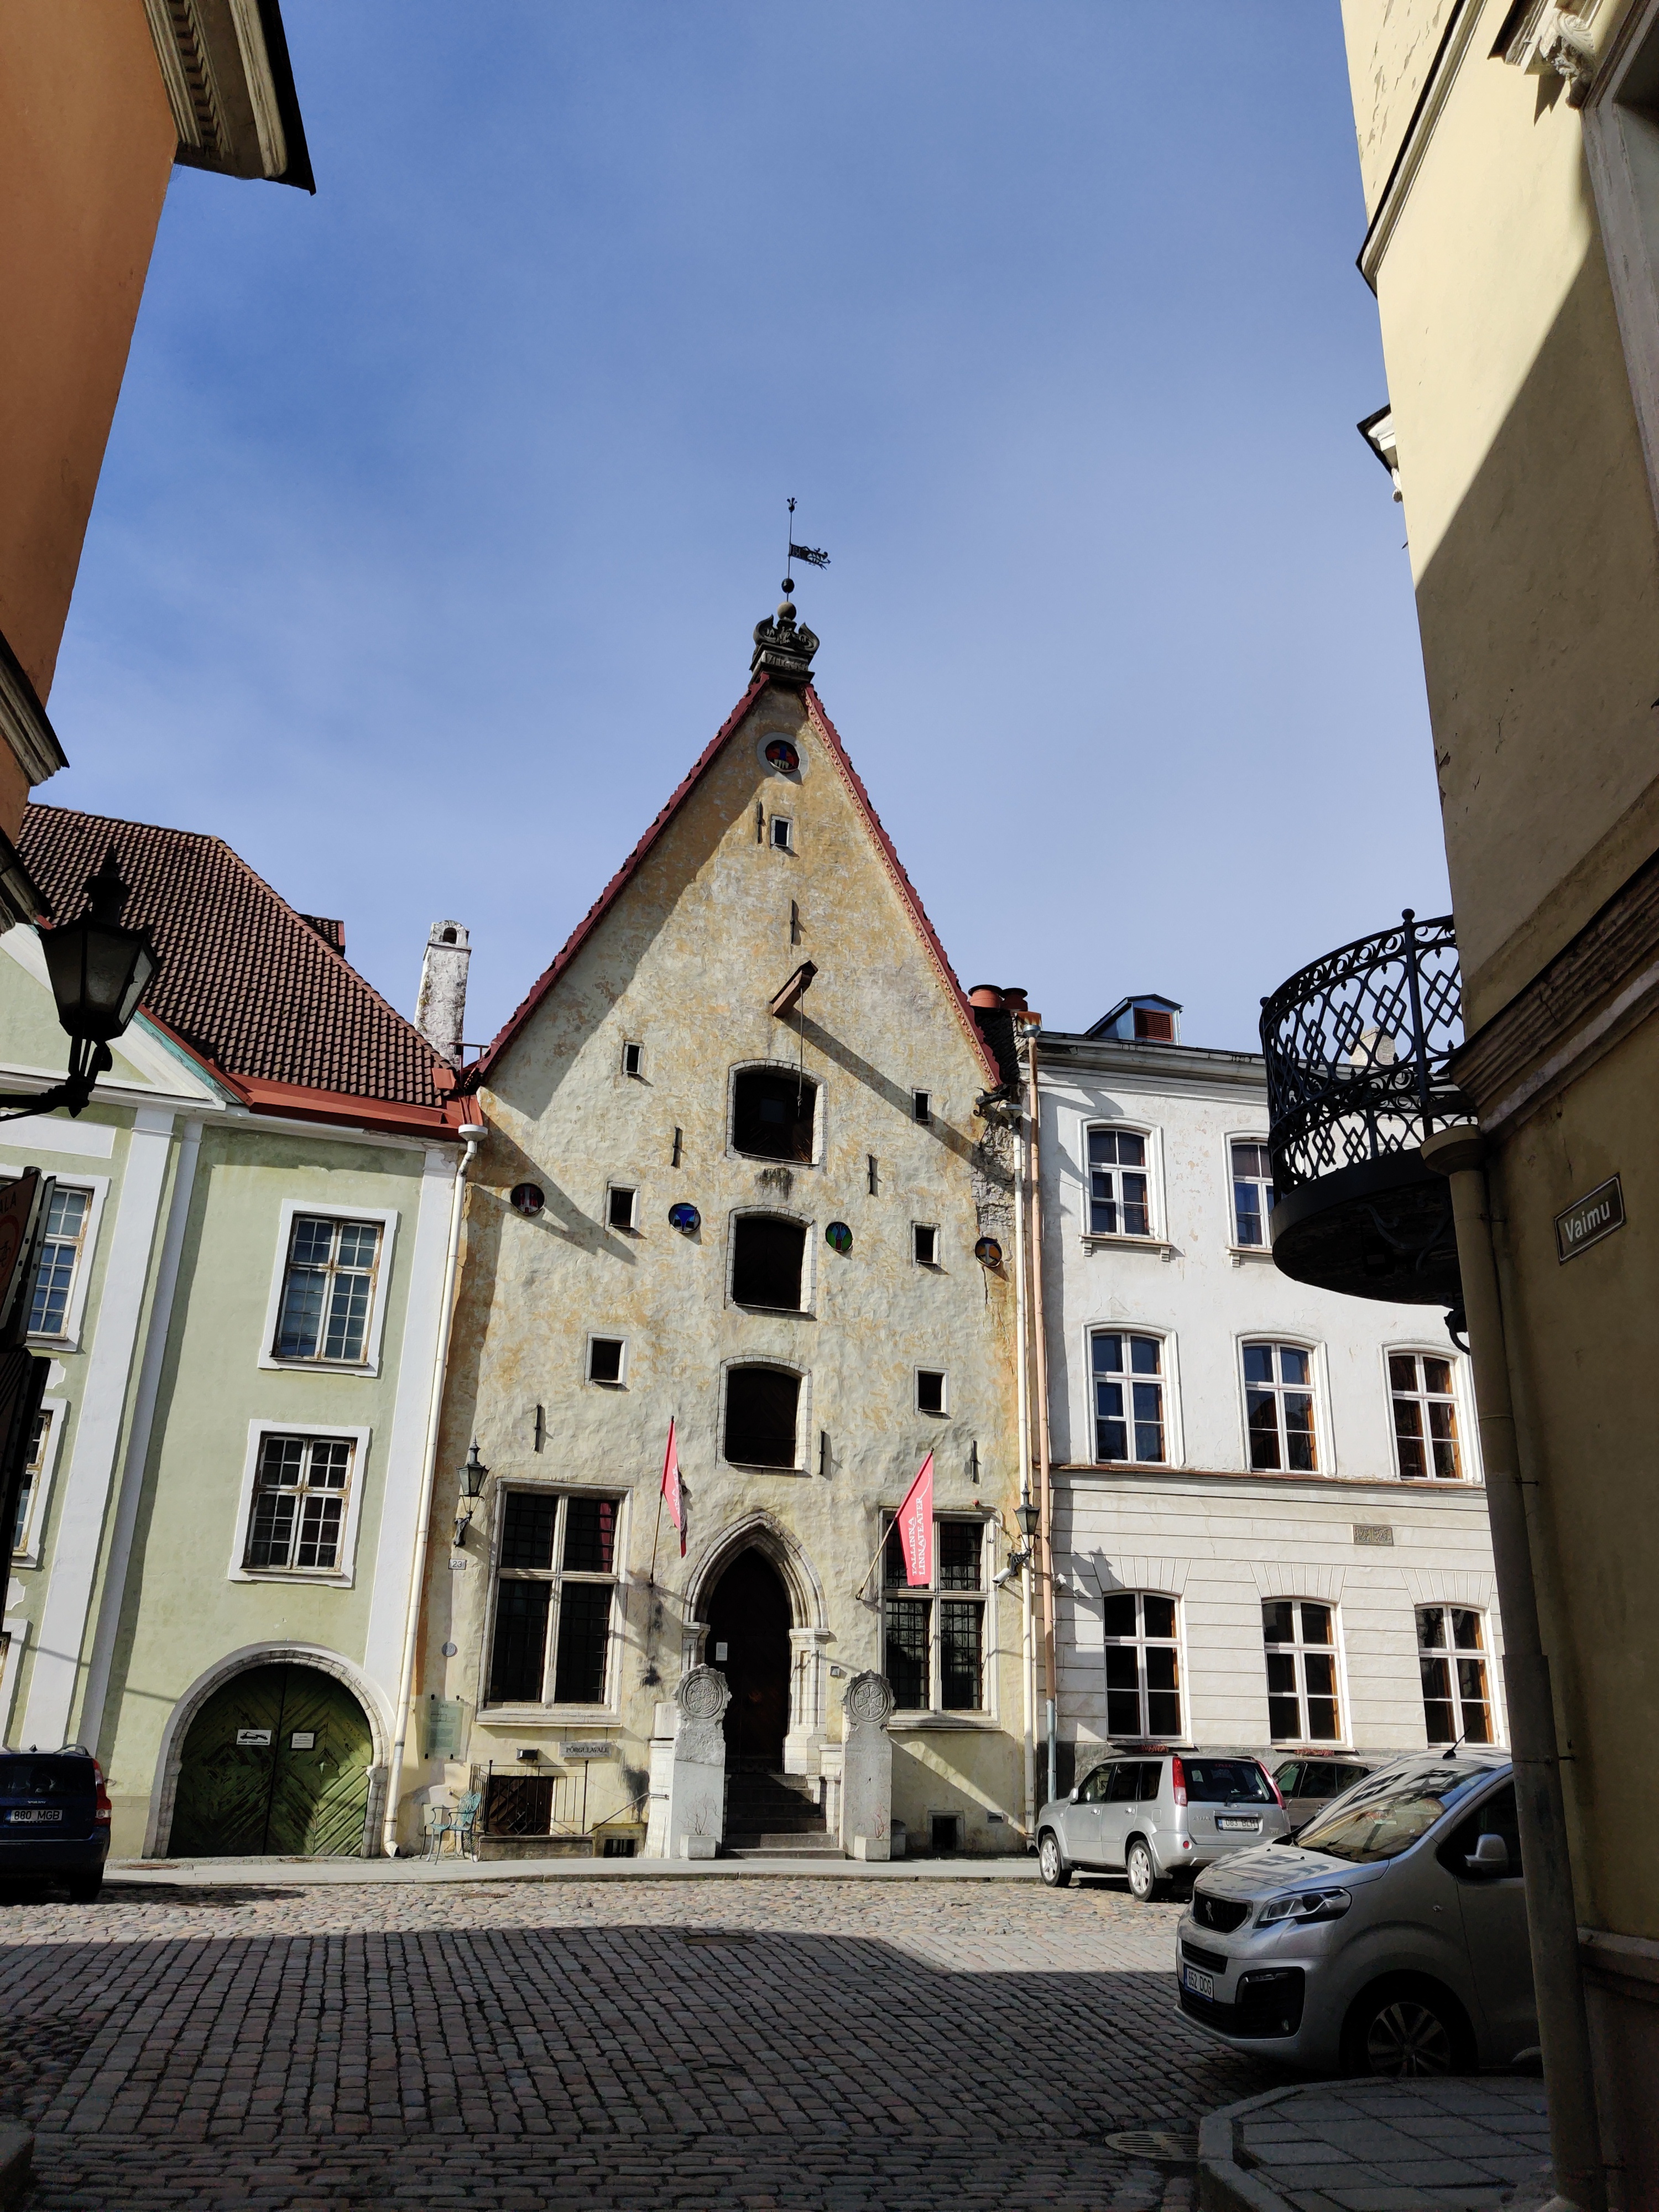 Wide Street in Tallinn Old Town rephoto